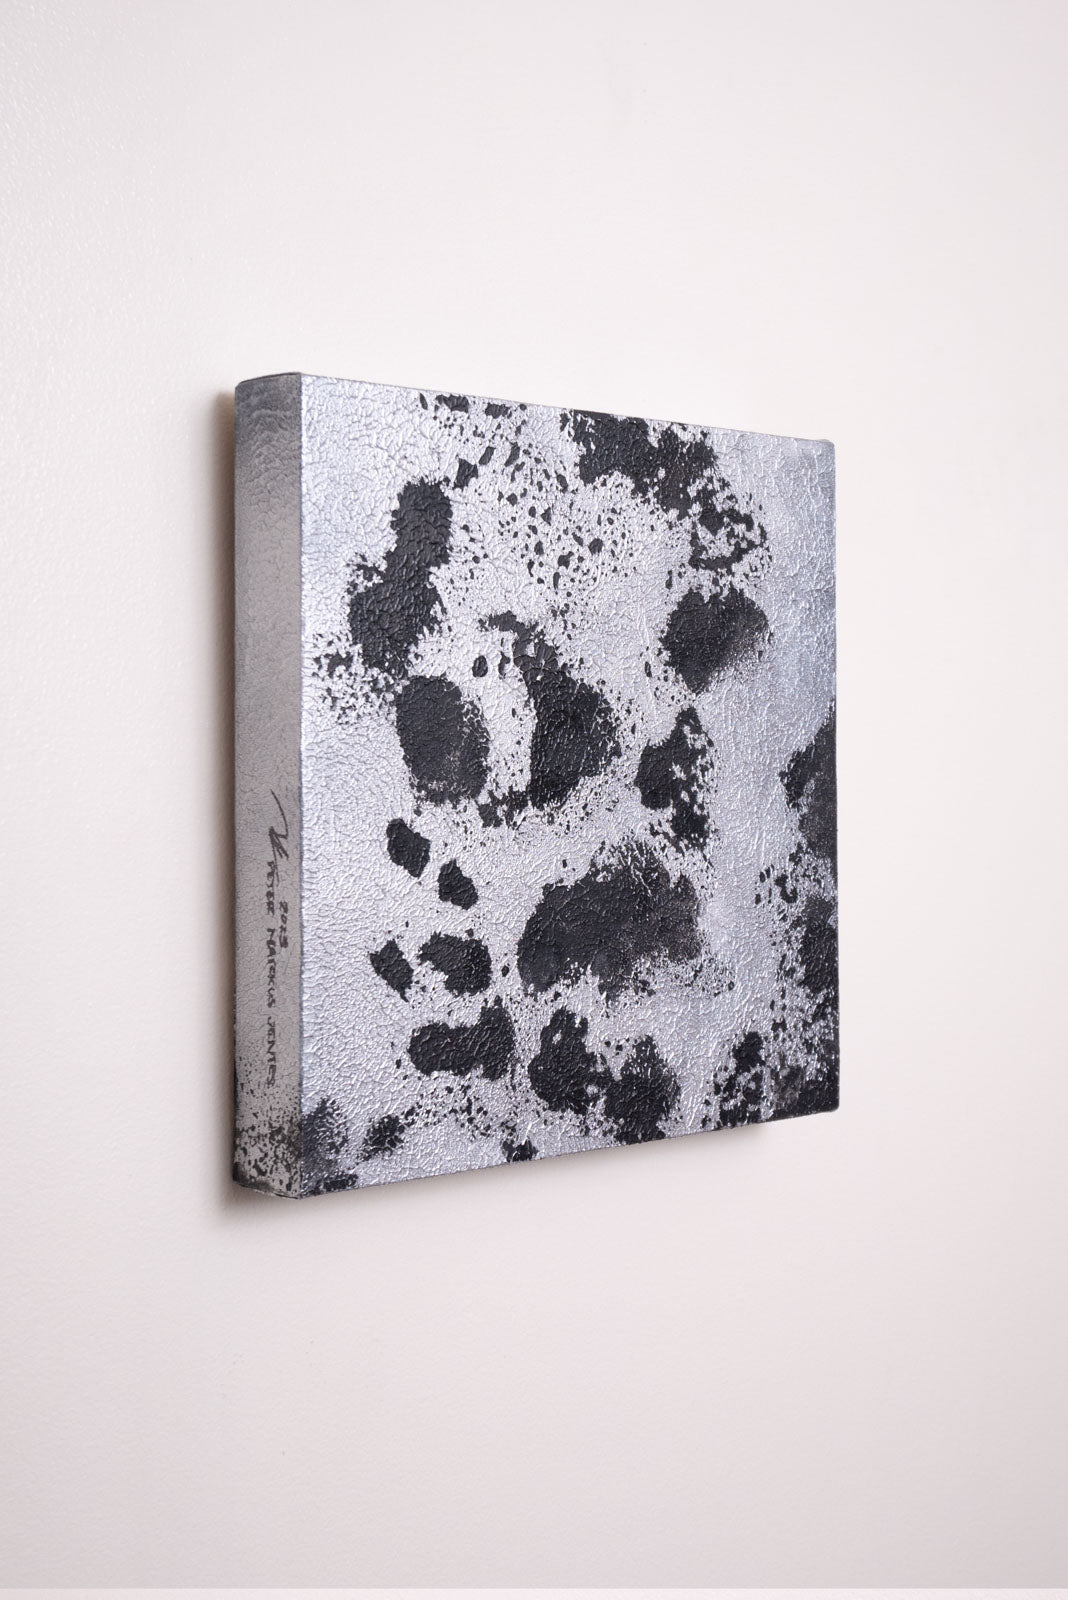 Koi Square 1/8 - Acrylic & Metallic Spray Paint on Canvas